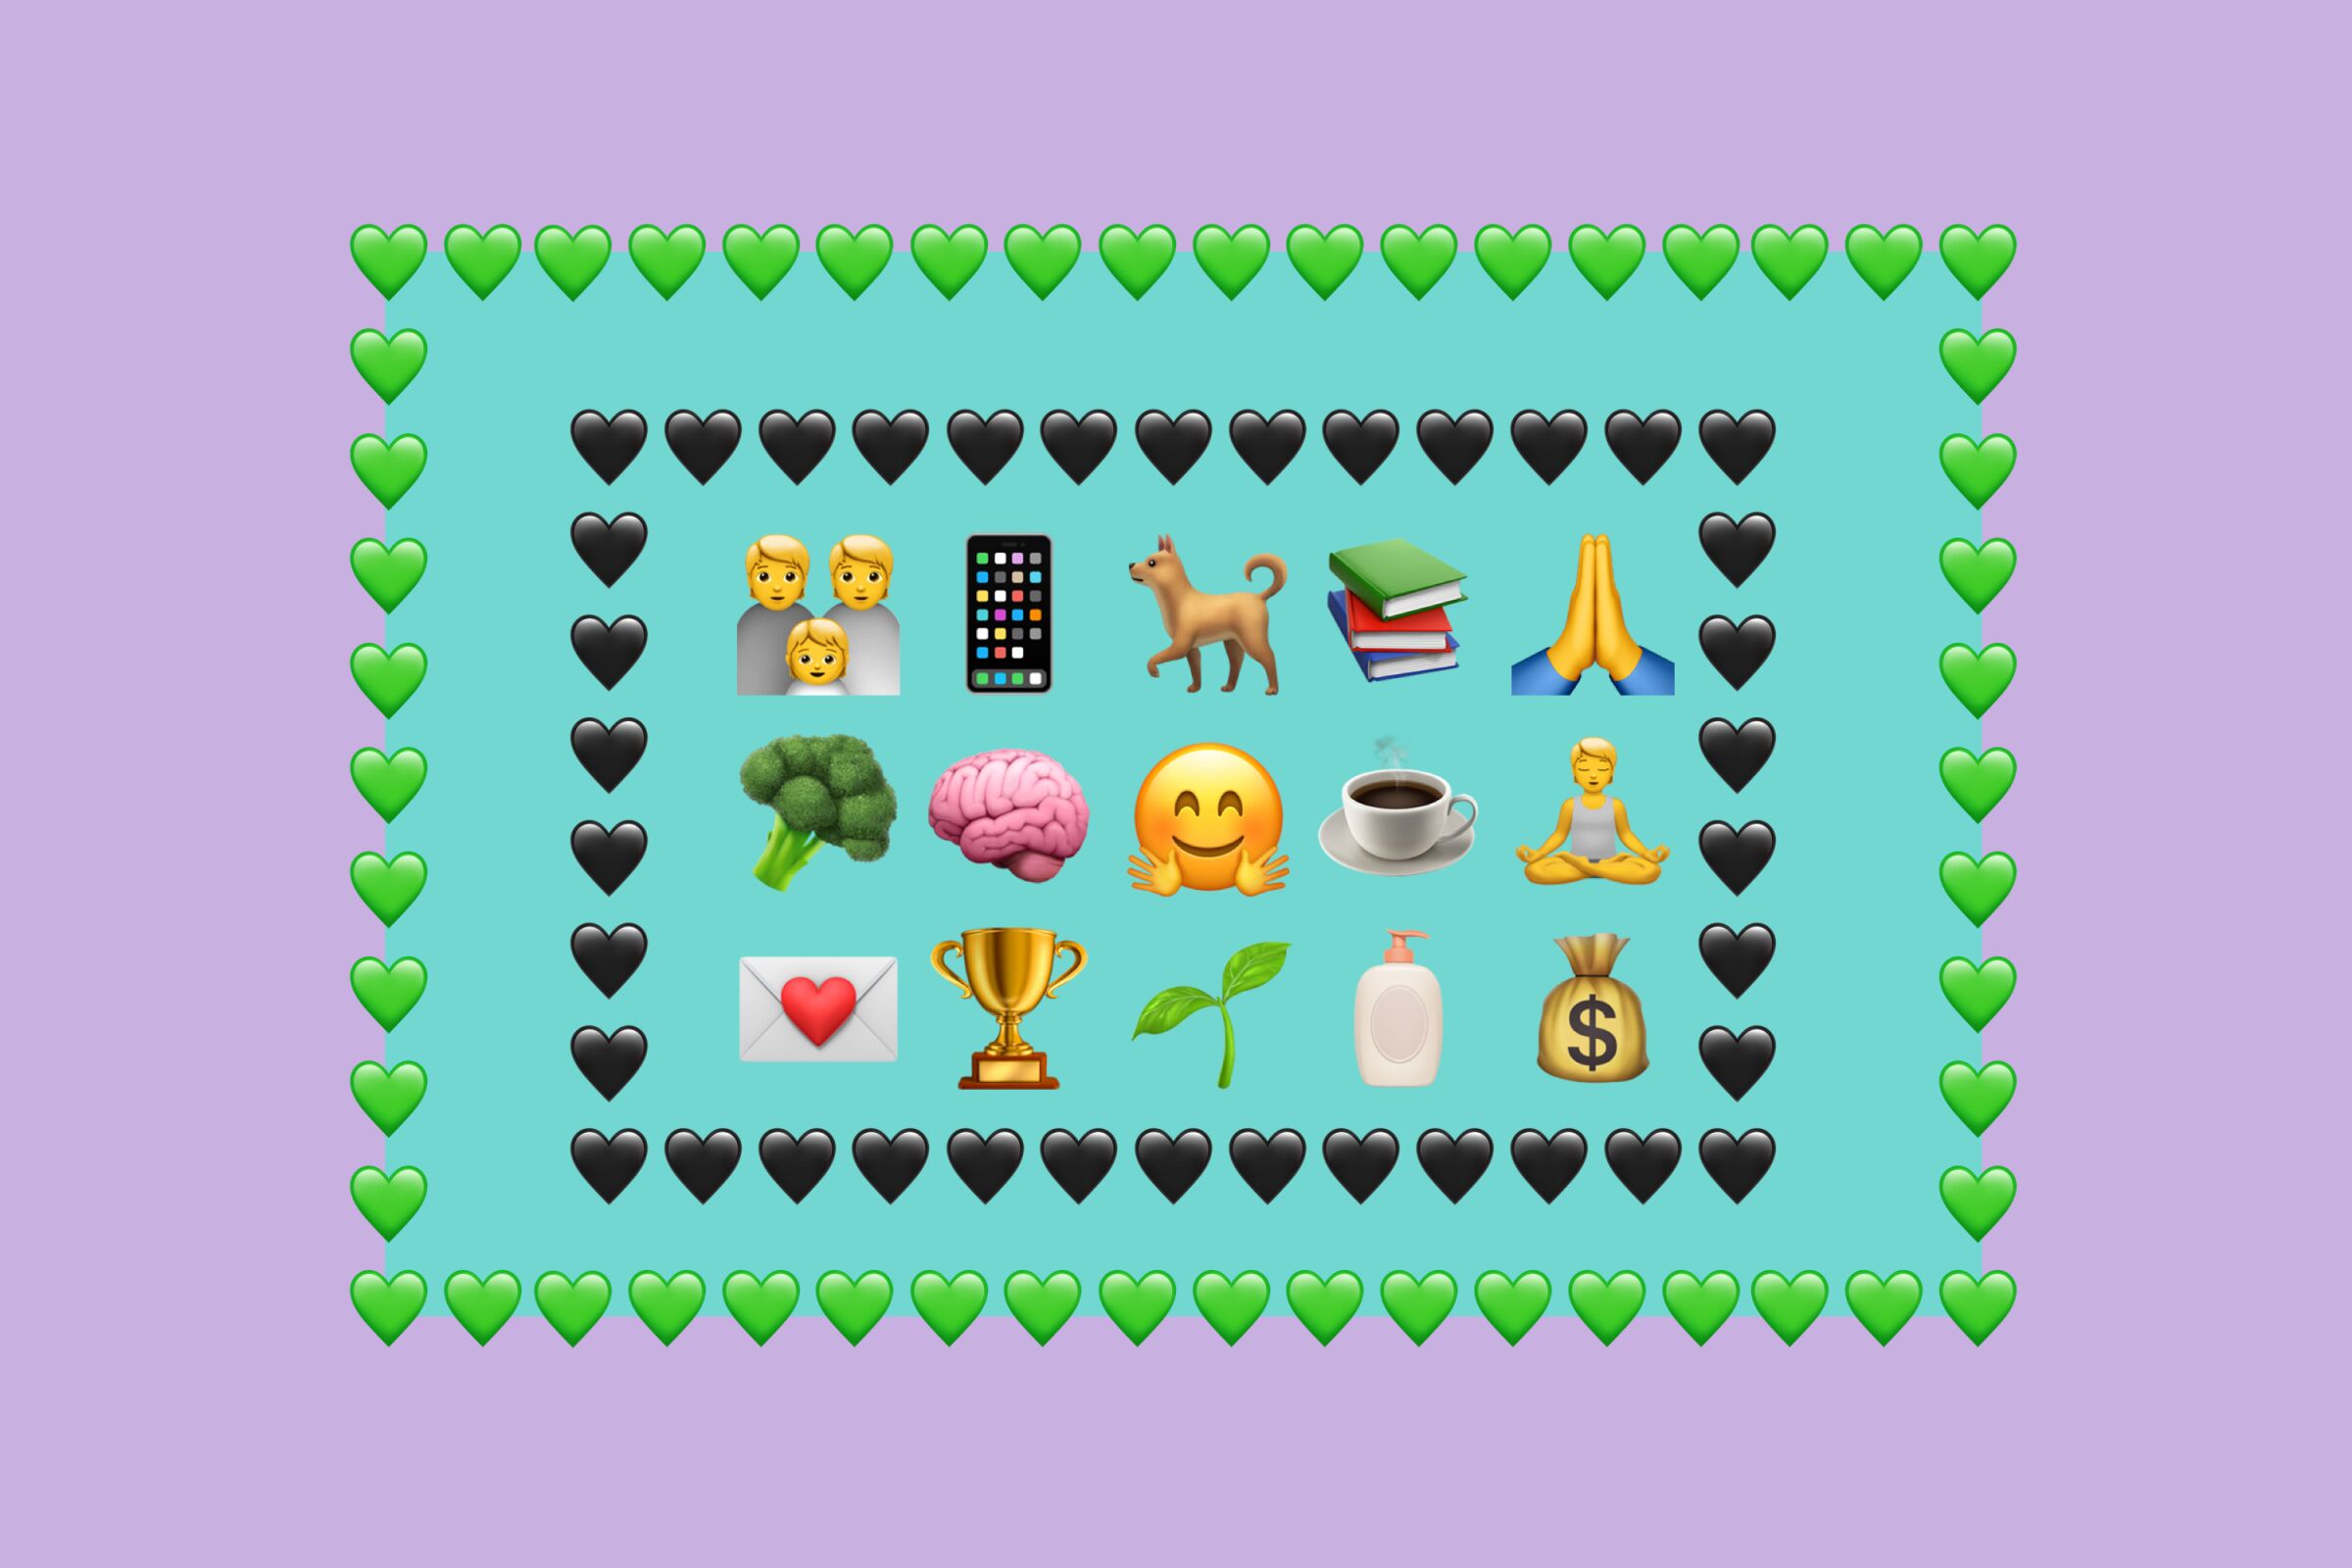 Heart emojis surrounding broccoli, brain, coffee, trophy and other emoji.